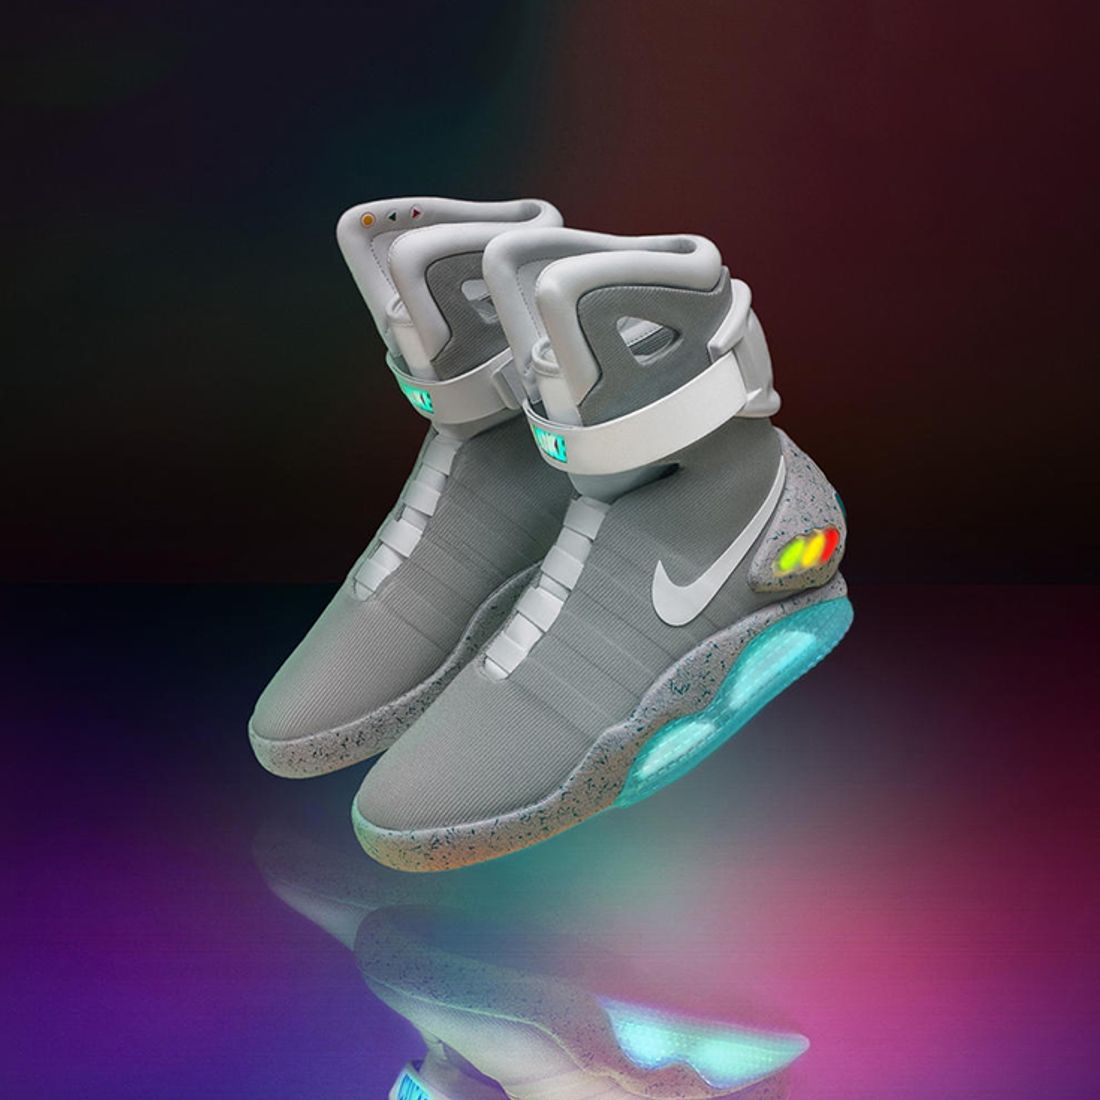 Omgeving restjes Diversen 10 Years On: A Look Back at the Nike Air Mag's Long-Awaited 2011 Release -  Sneaker Freaker